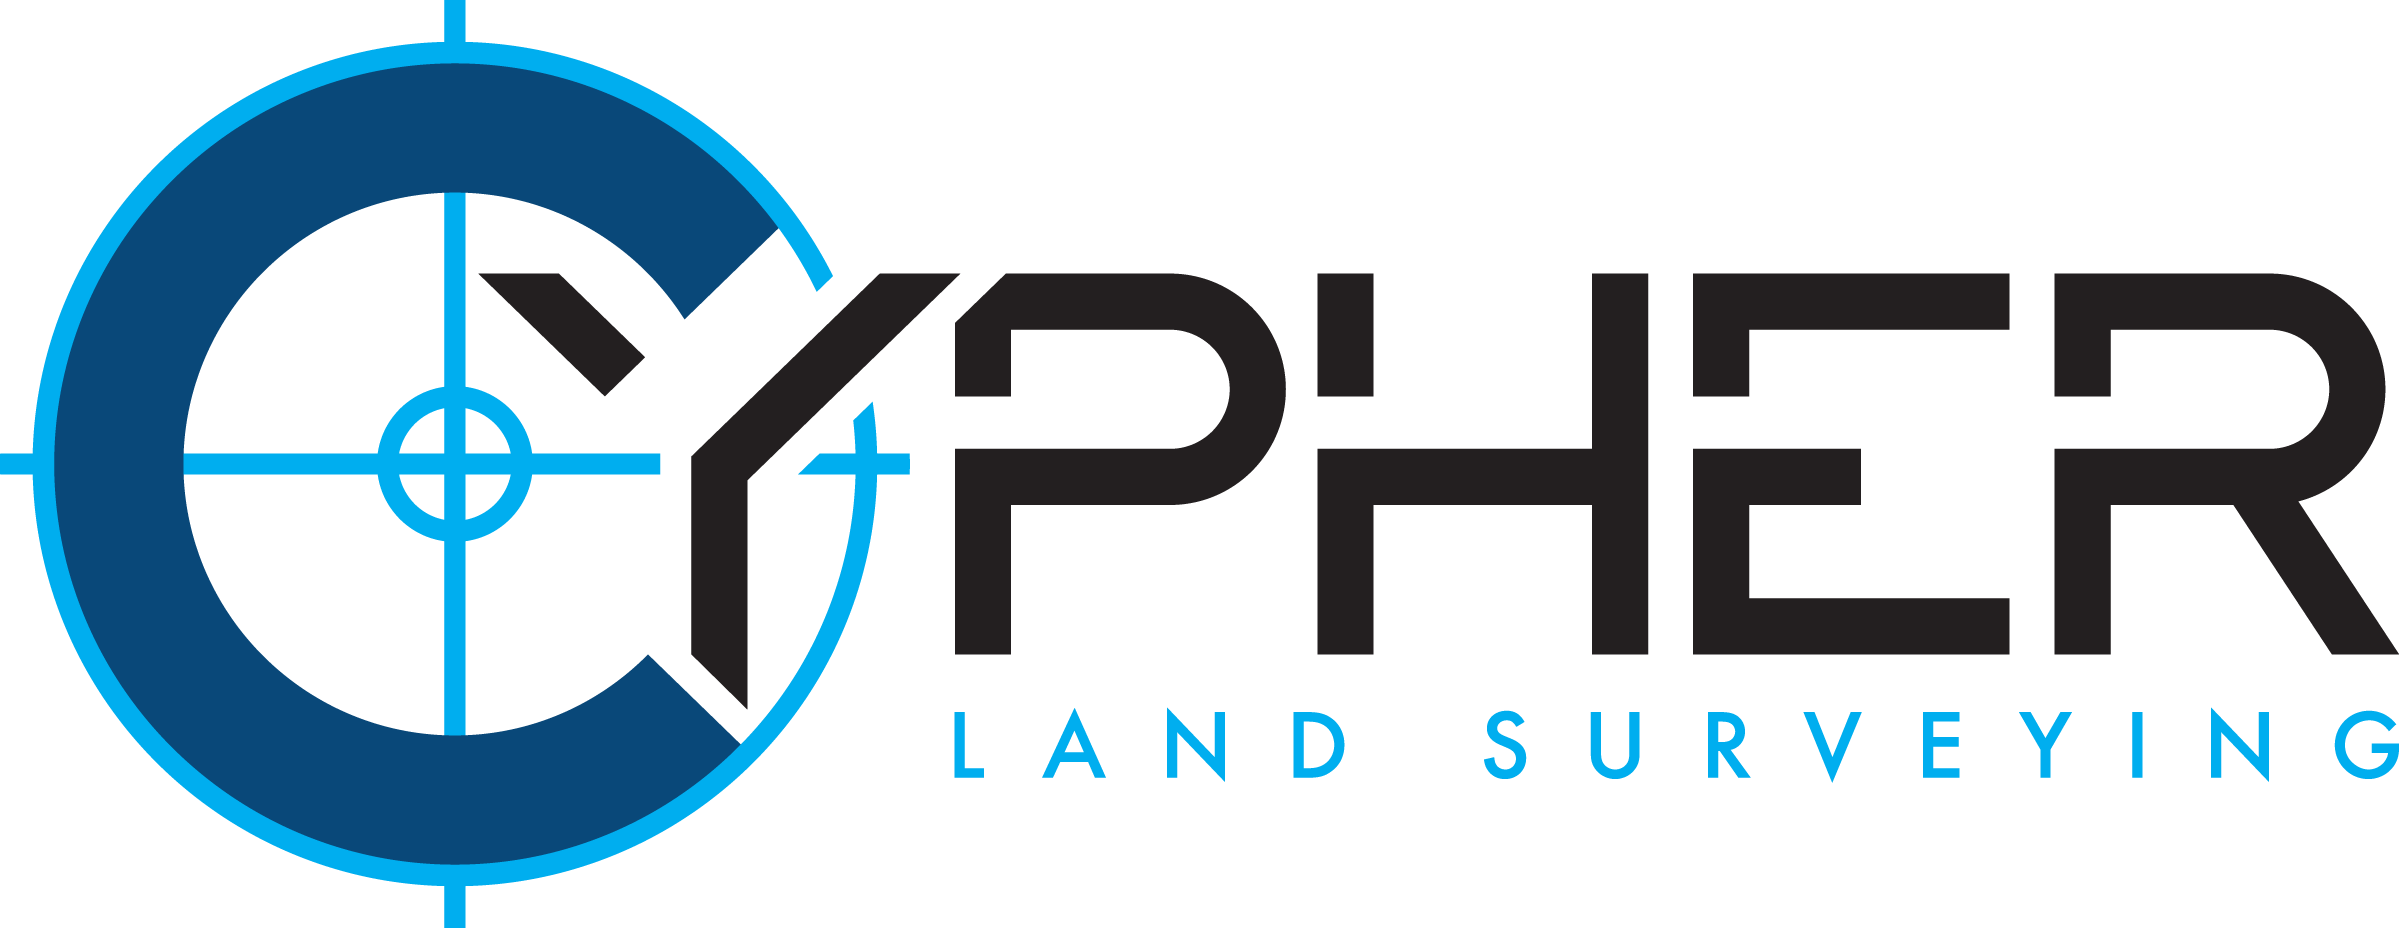 Cypher Land Surveying logo